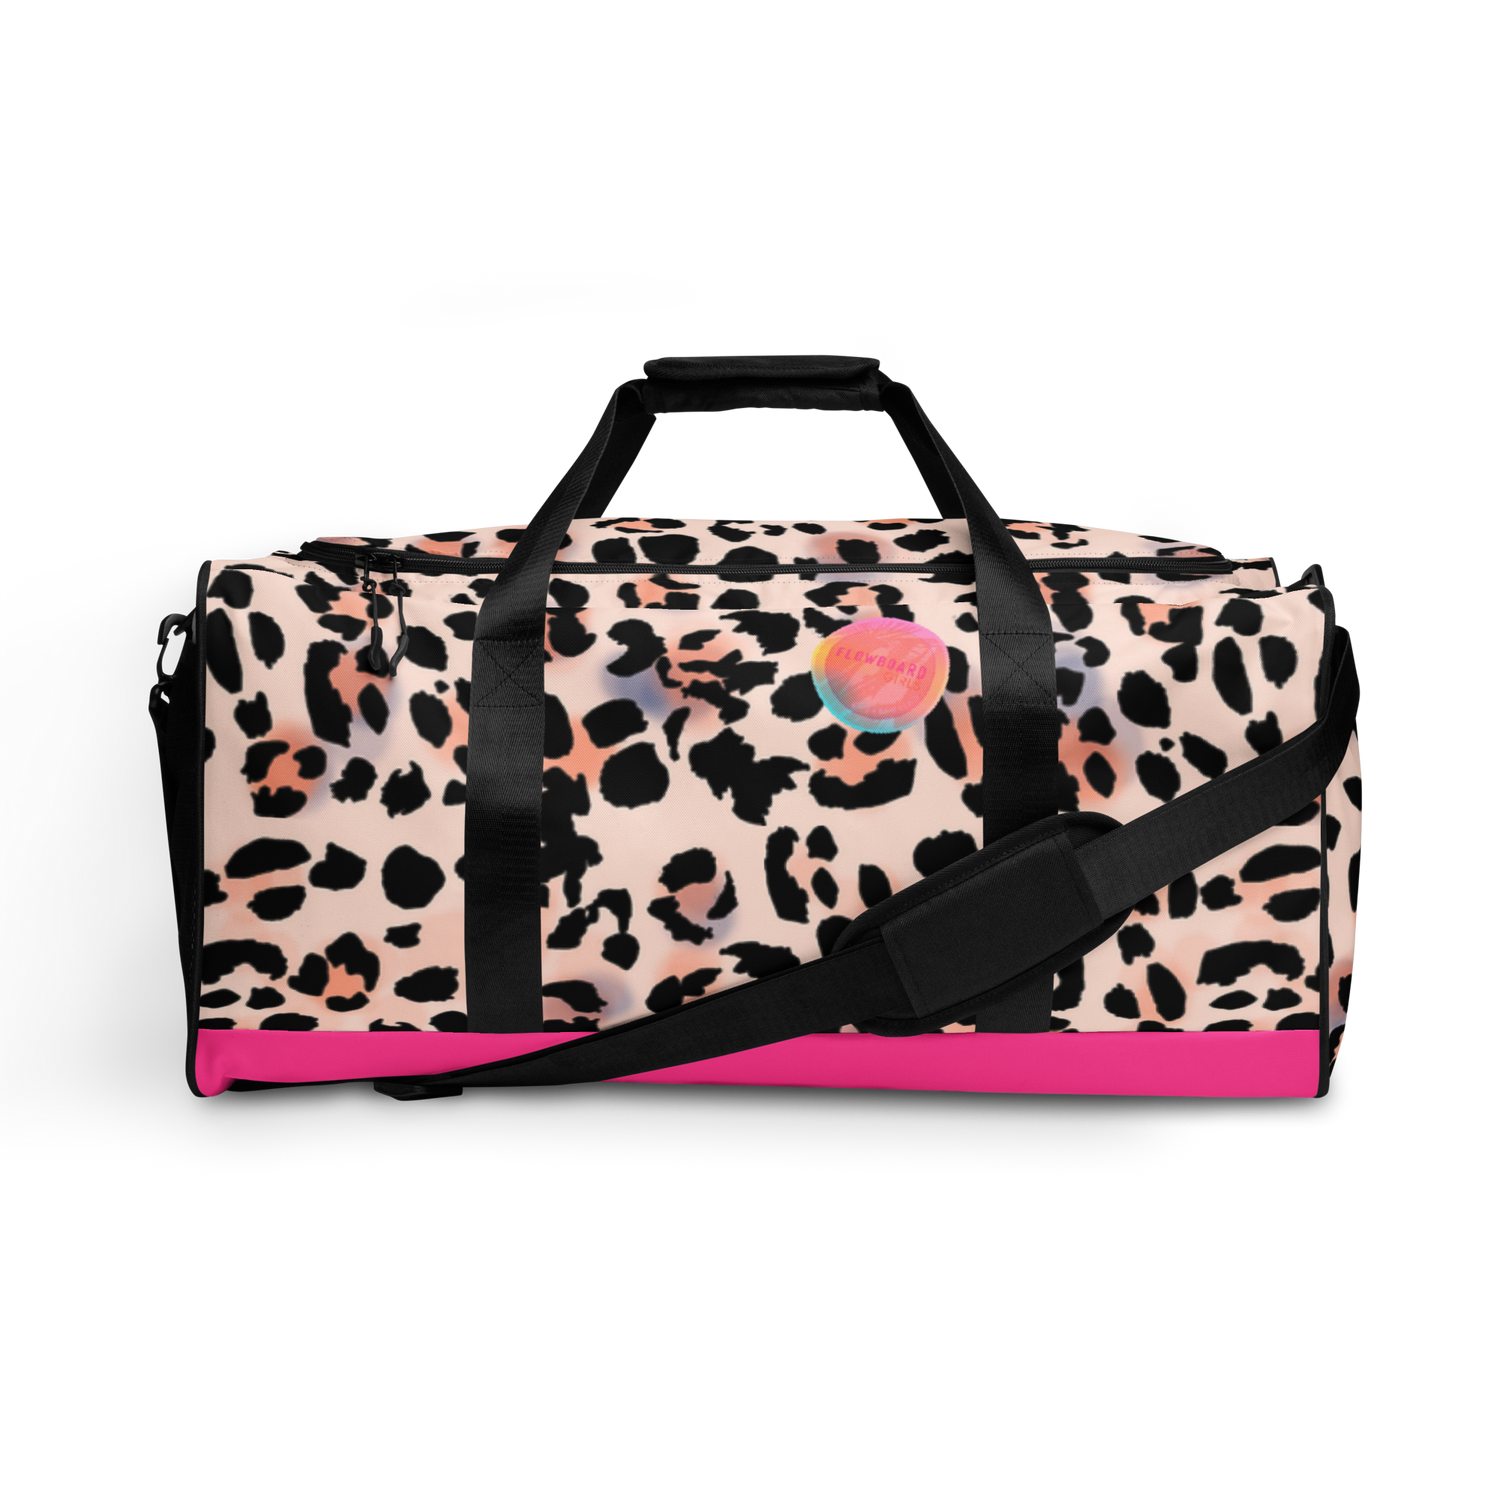 FLOWBOARD GIRLS Duffle bag in Cheetah